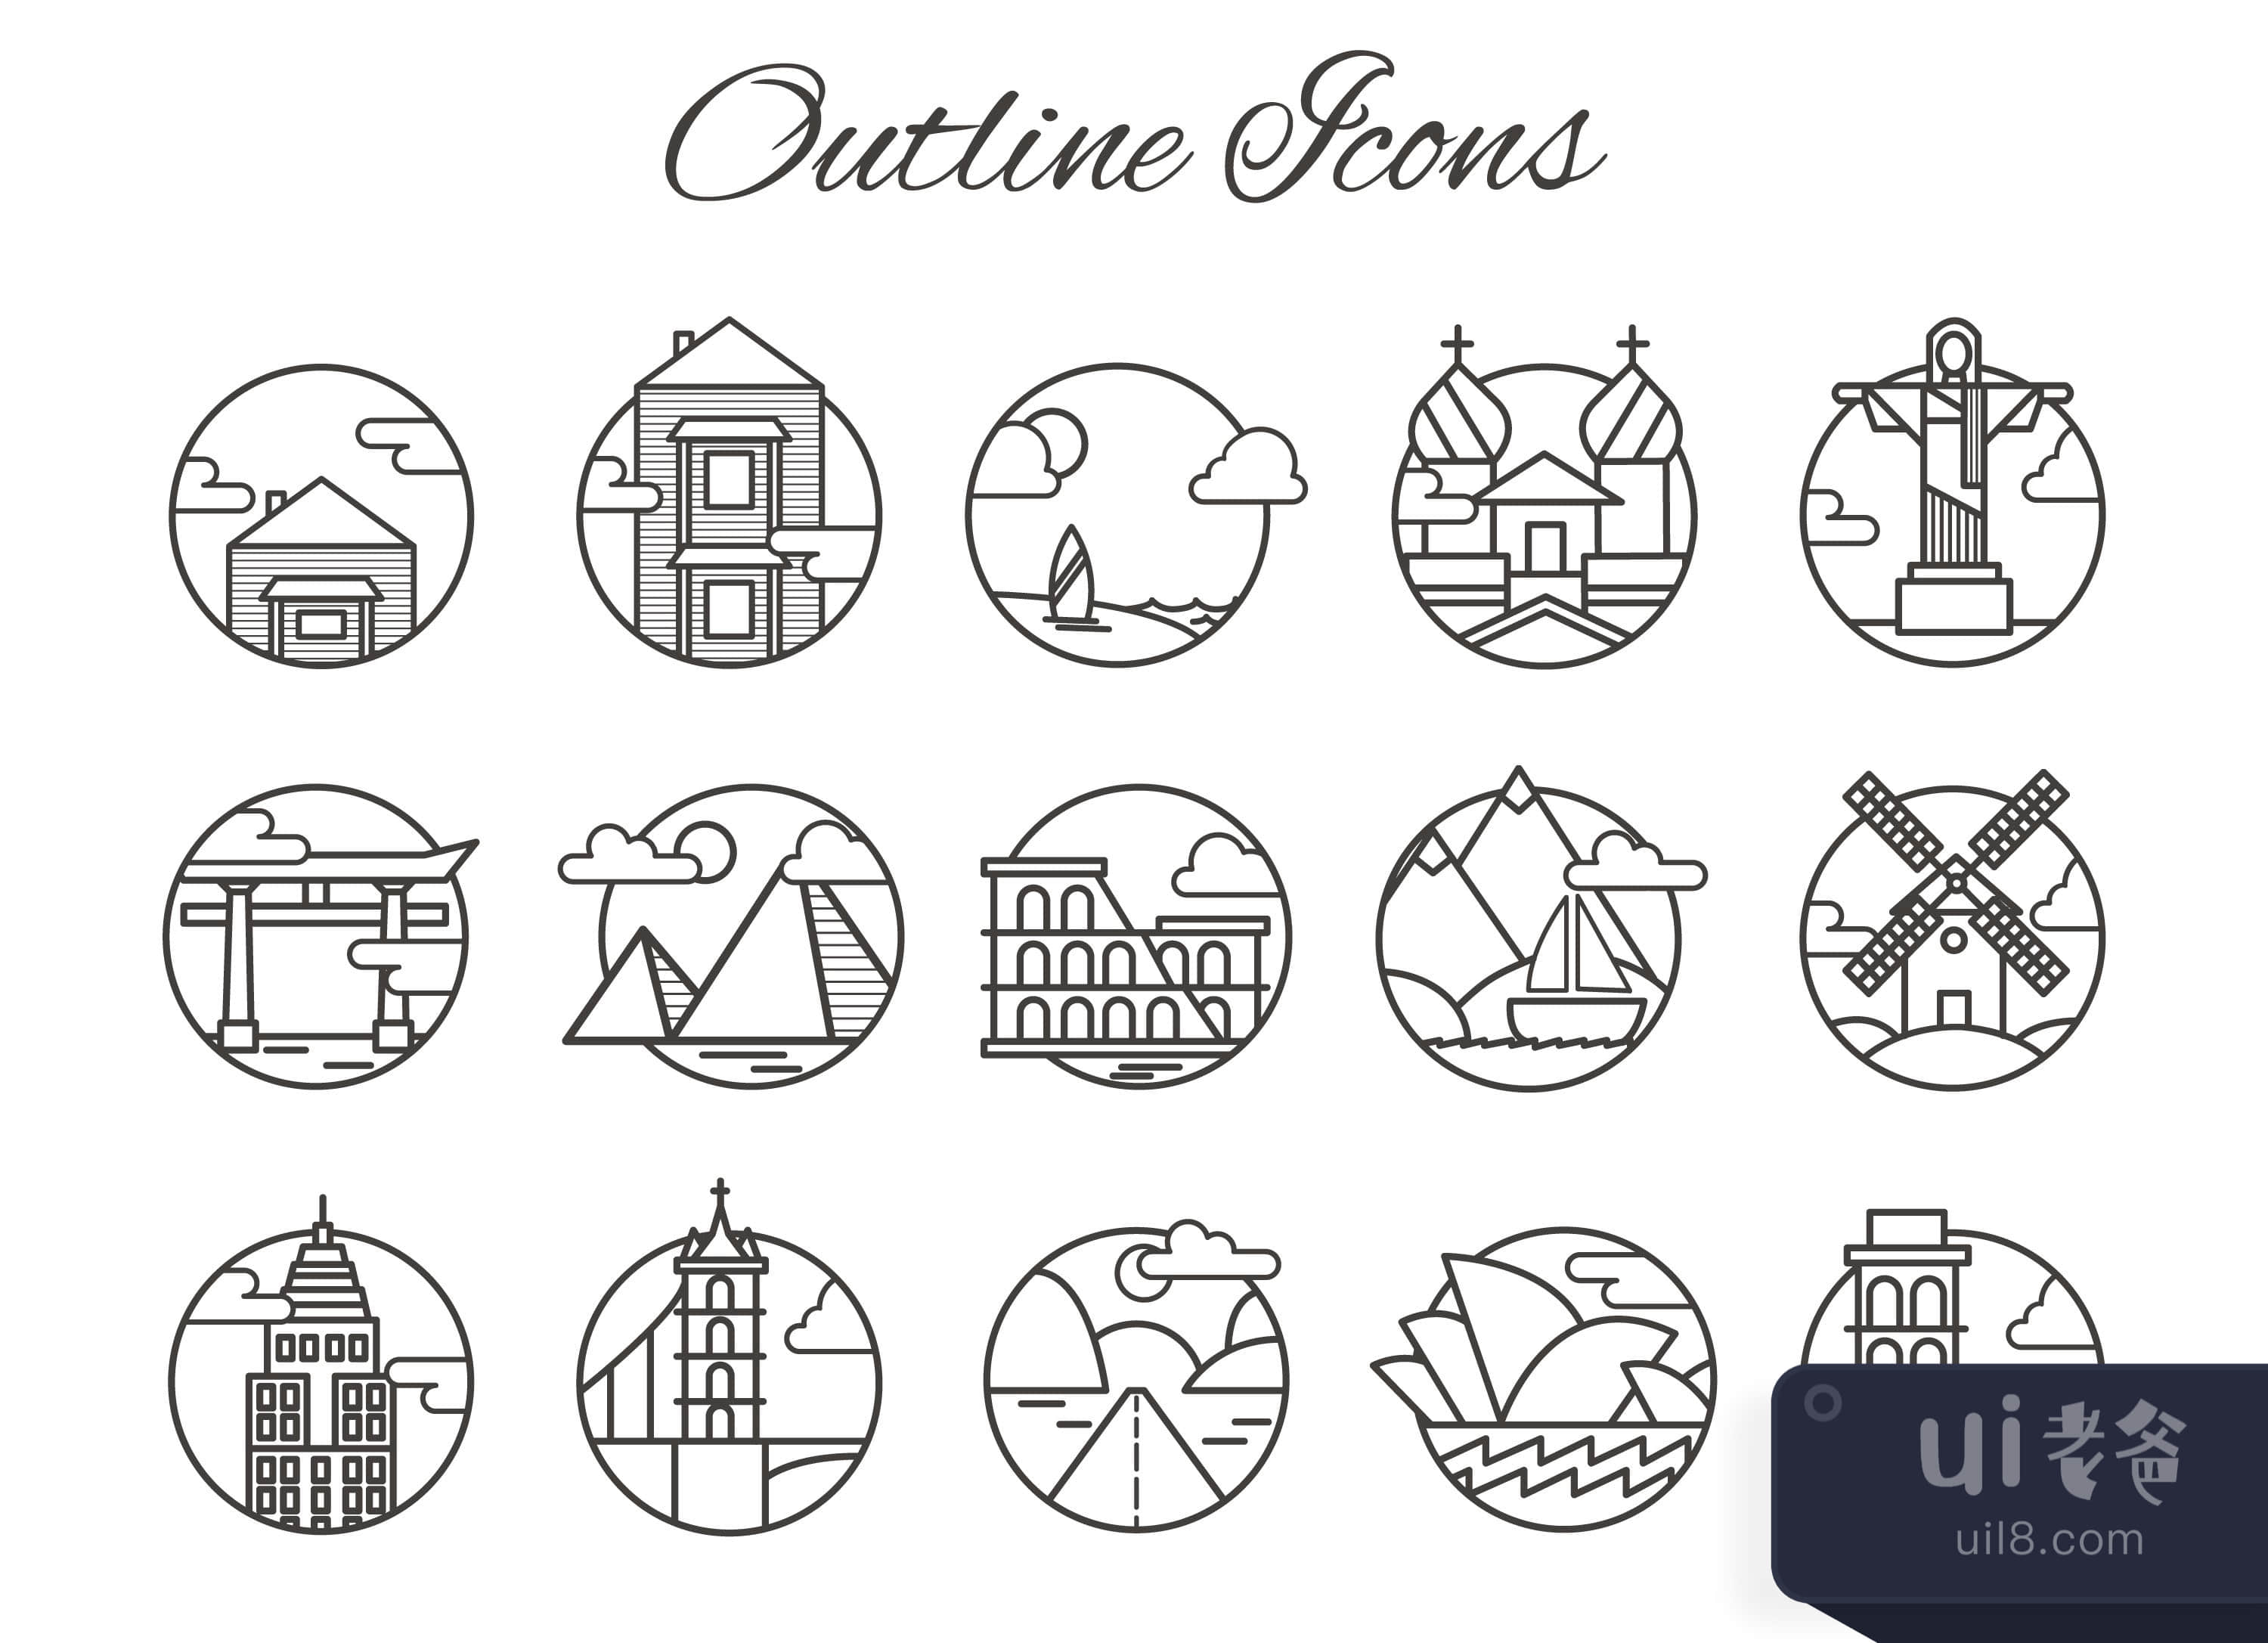 大纲式景观图标 (Outline landscape icons)插图